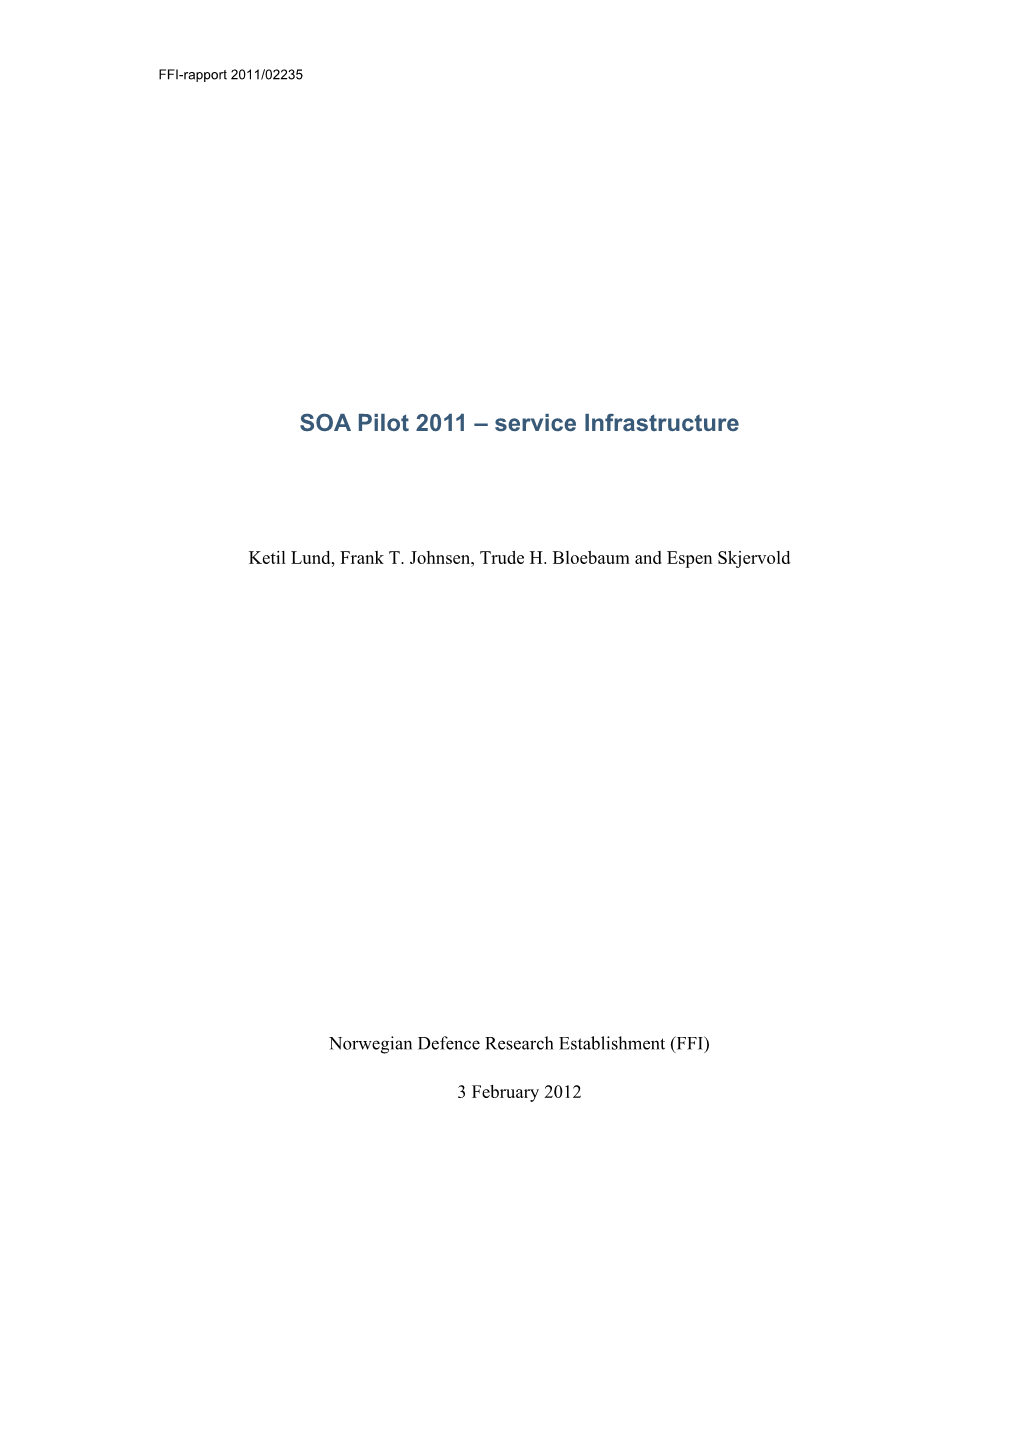 SOA Pilot 2011 – Service Infrastructure